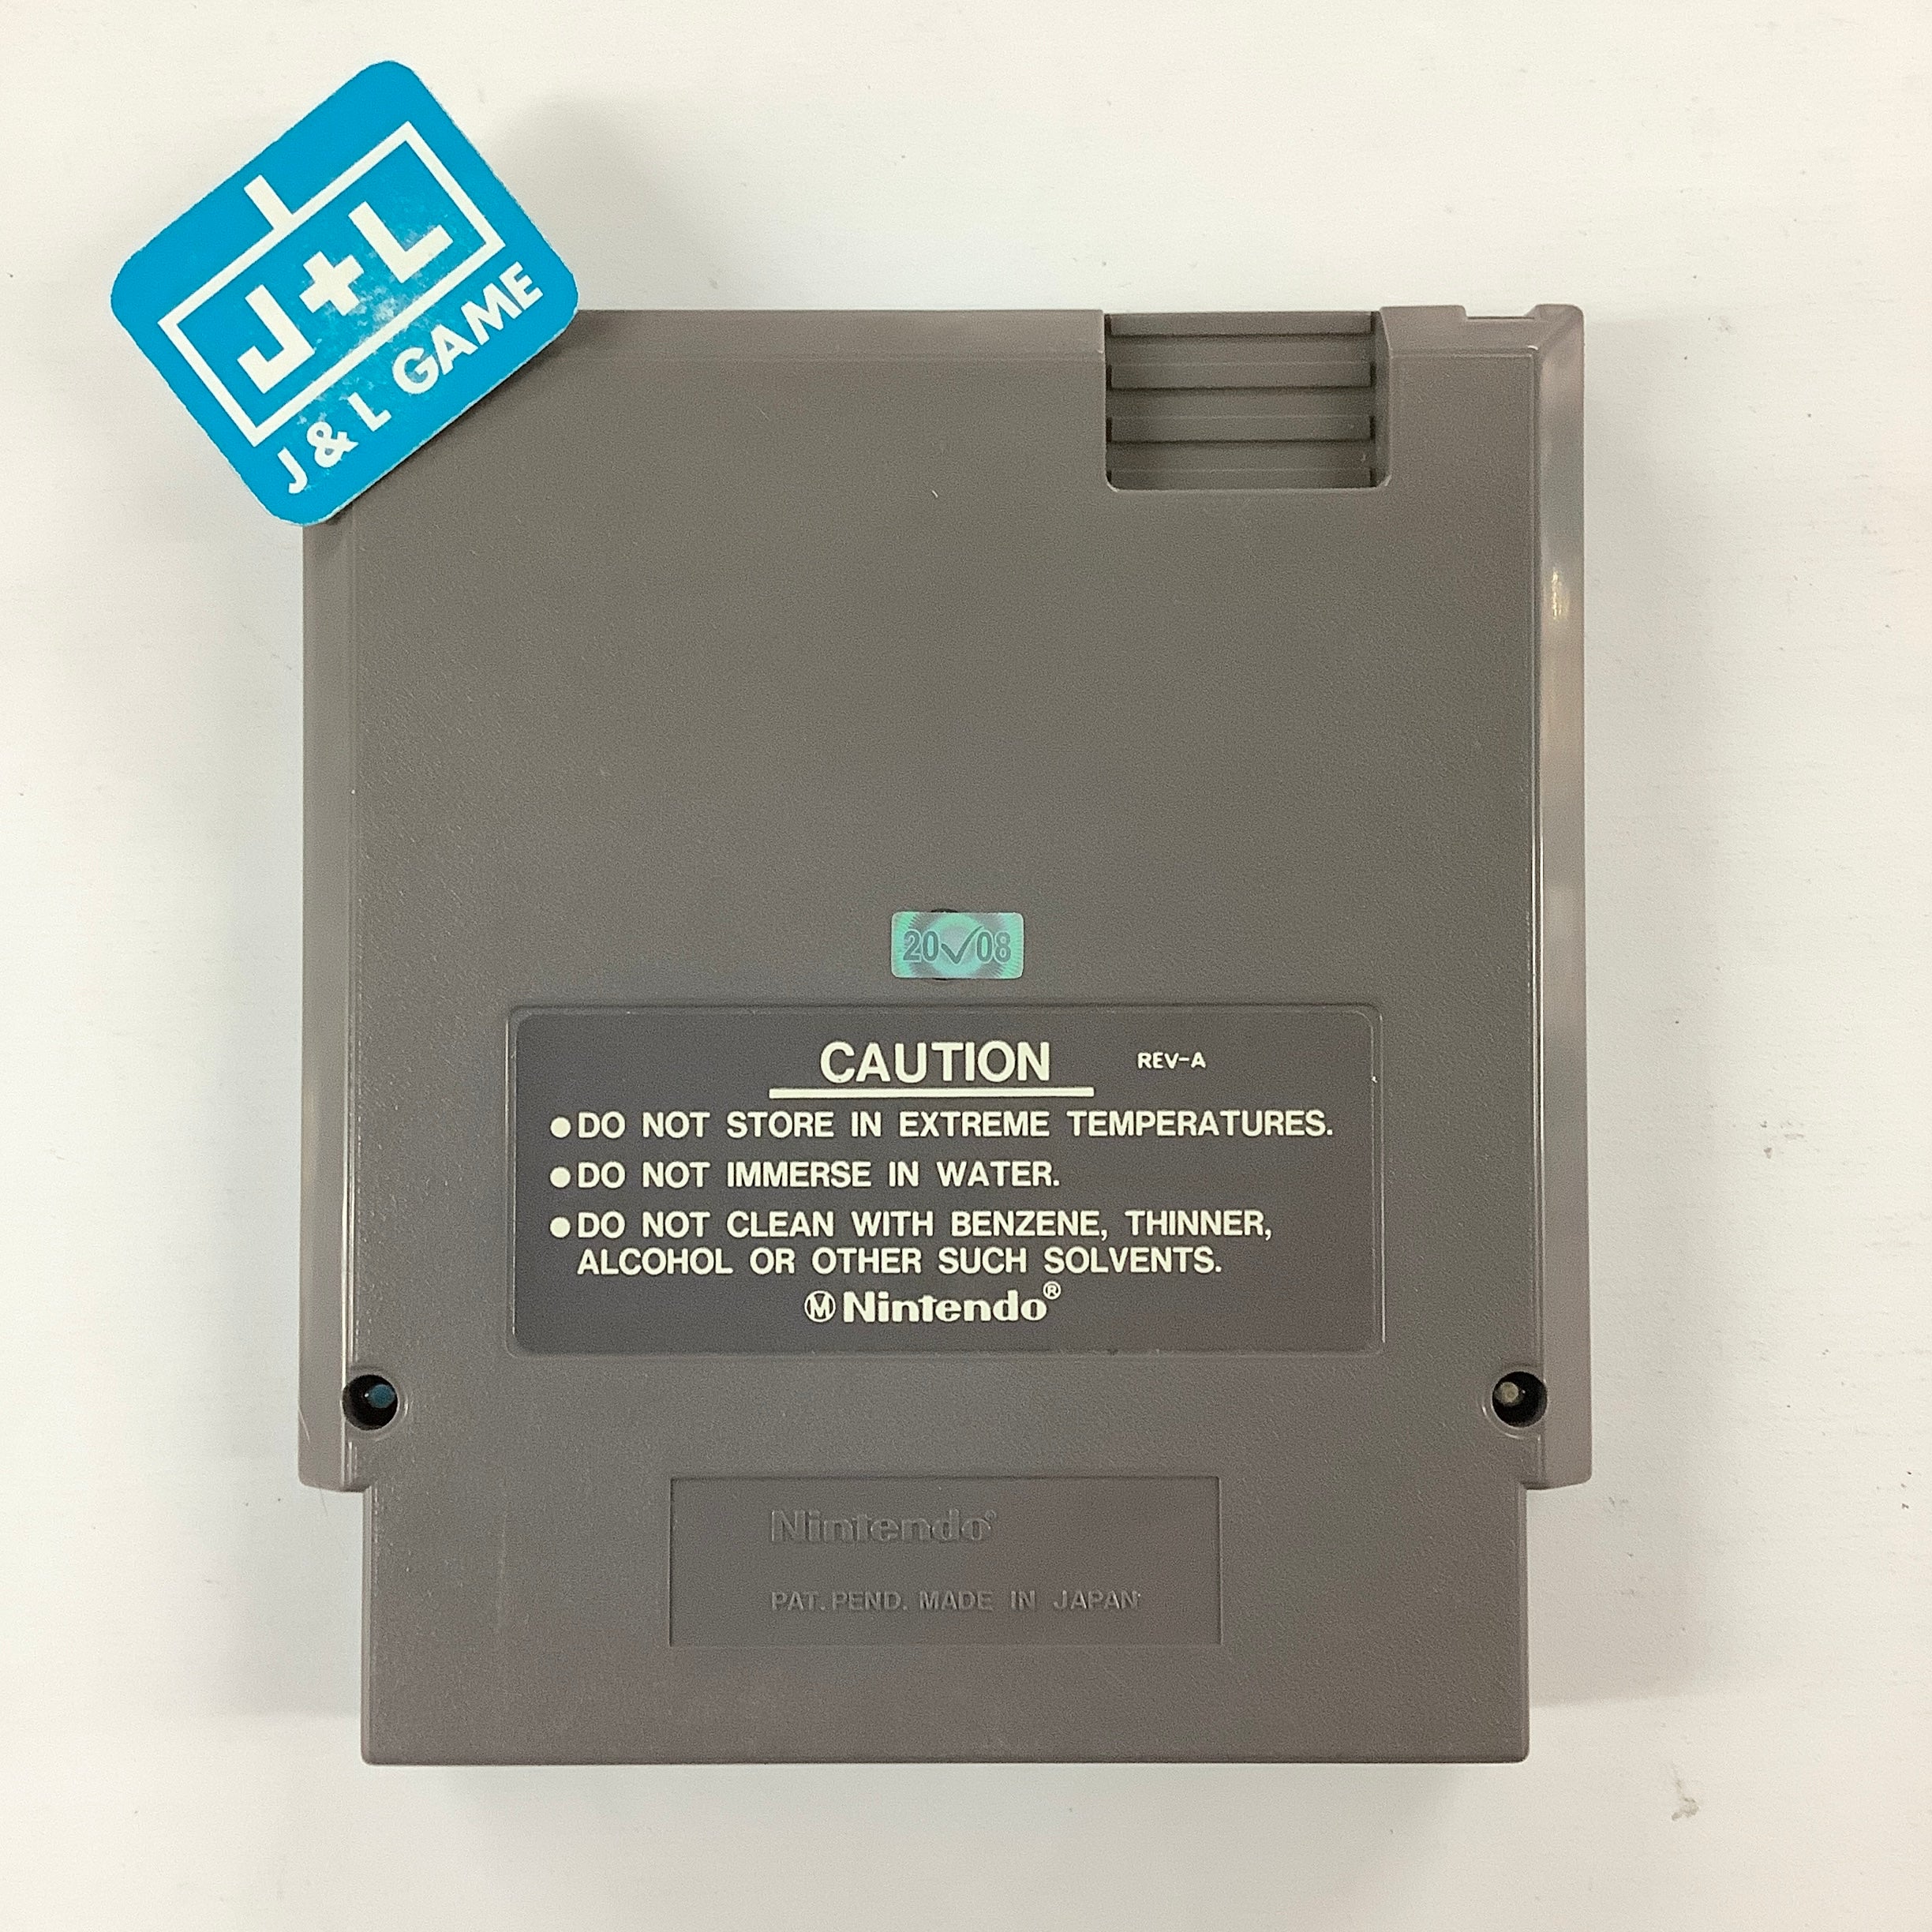 Spy vs. Spy - (NES) Nintendo Entertainment System [Pre-Owned] Video Games Kemco   